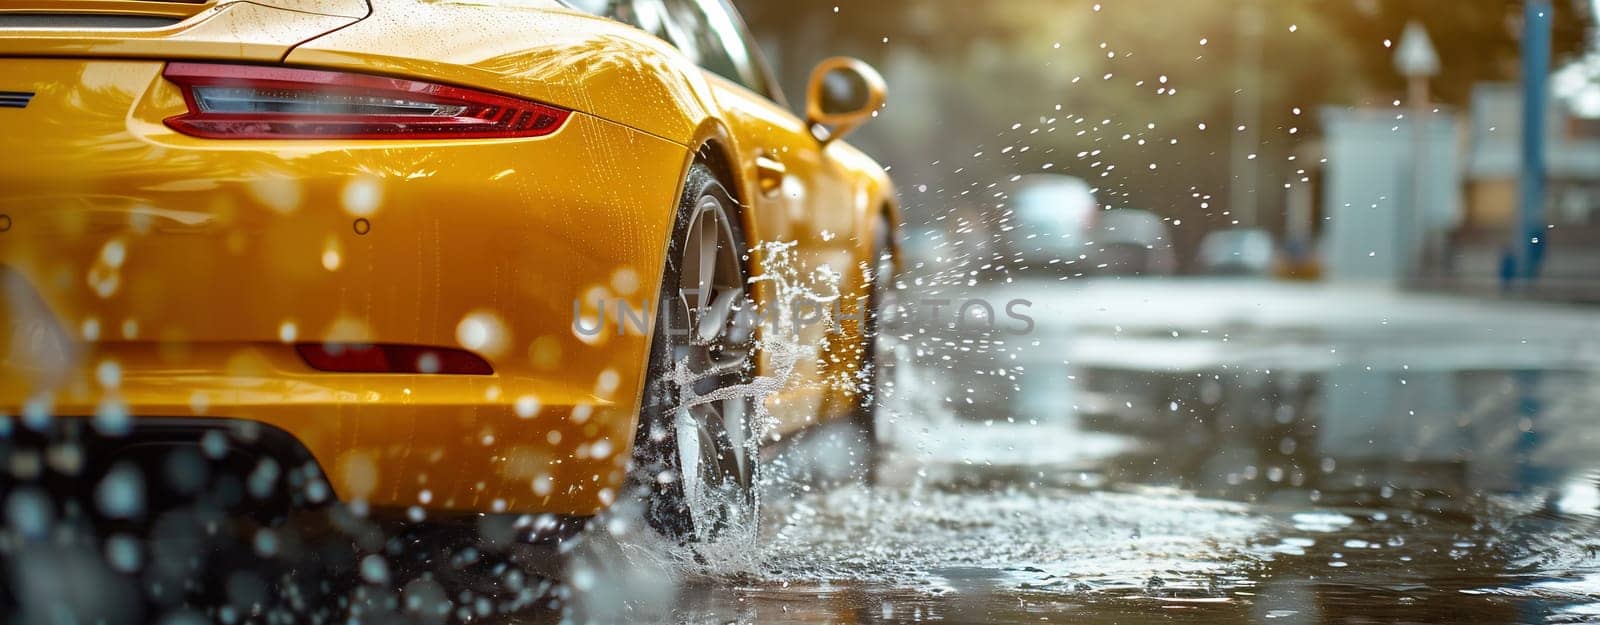 sports yellow car in the rain. High quality photo